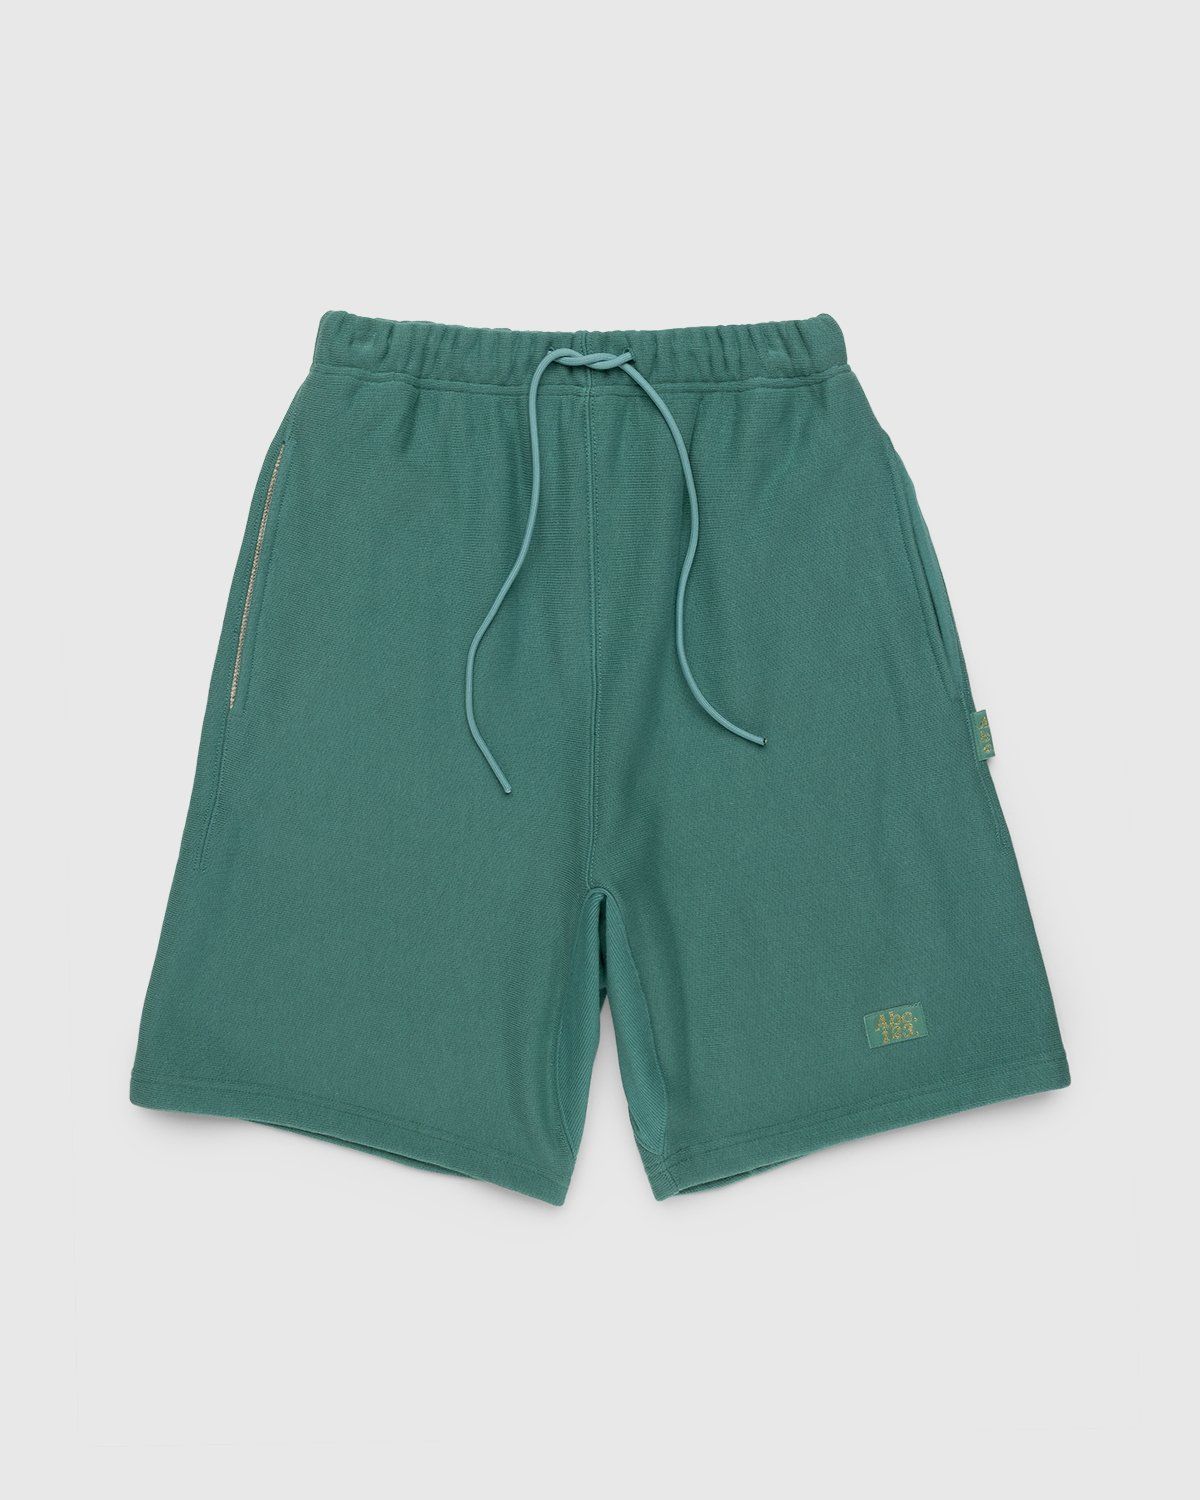 Abc. – Fleece Sweatshorts Apatite - Shorts - Green - Image 1